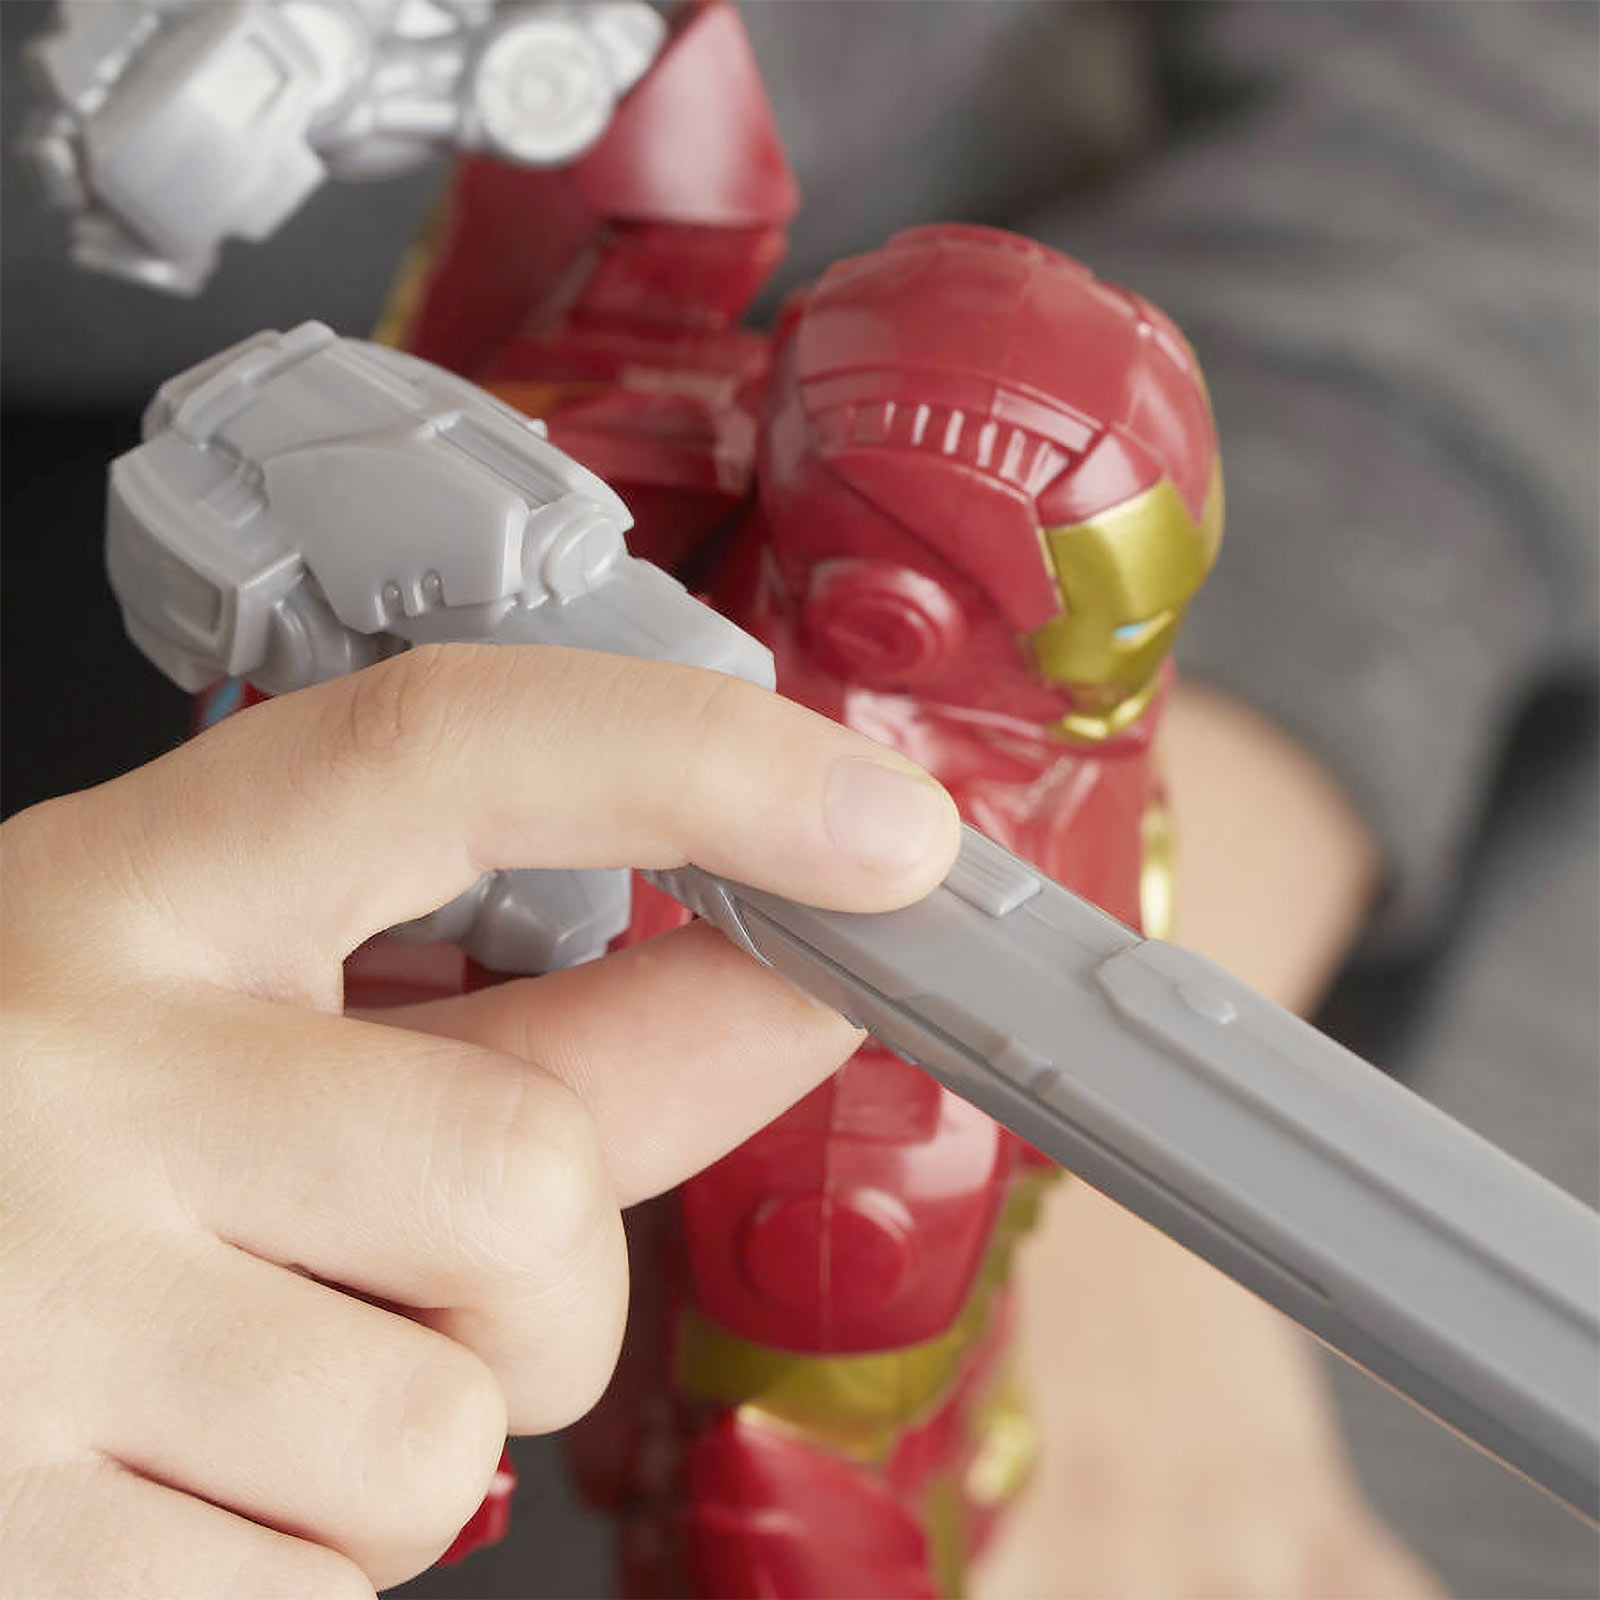 Avengers - Iron Man Blast Gear Actionfigur 29 cm